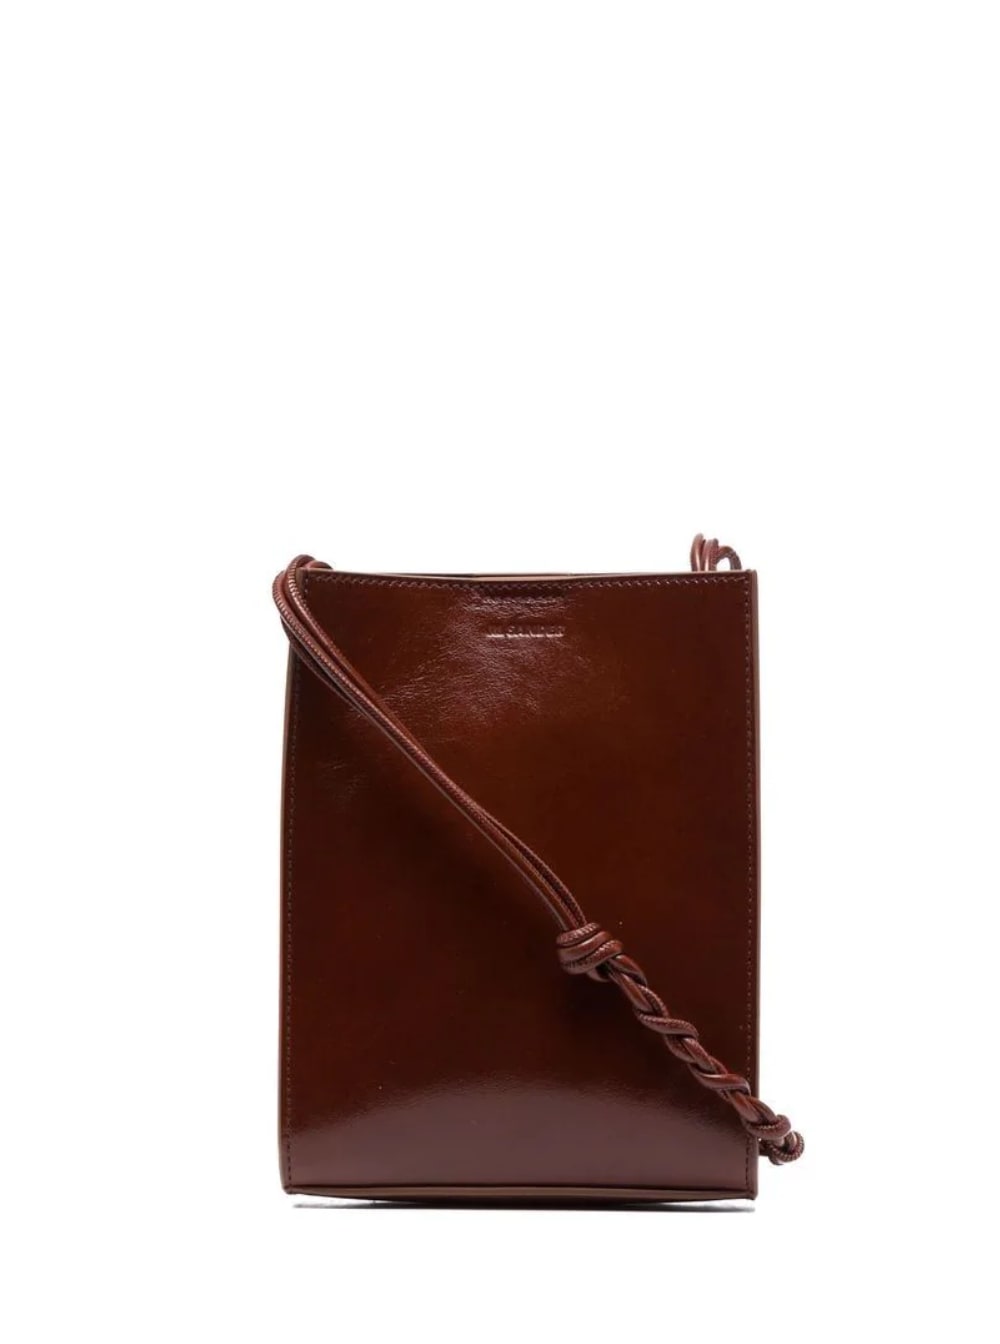 Jil Sander The Bridge Womans Tangle Small Brown Leather Crossbody Bag With Logo